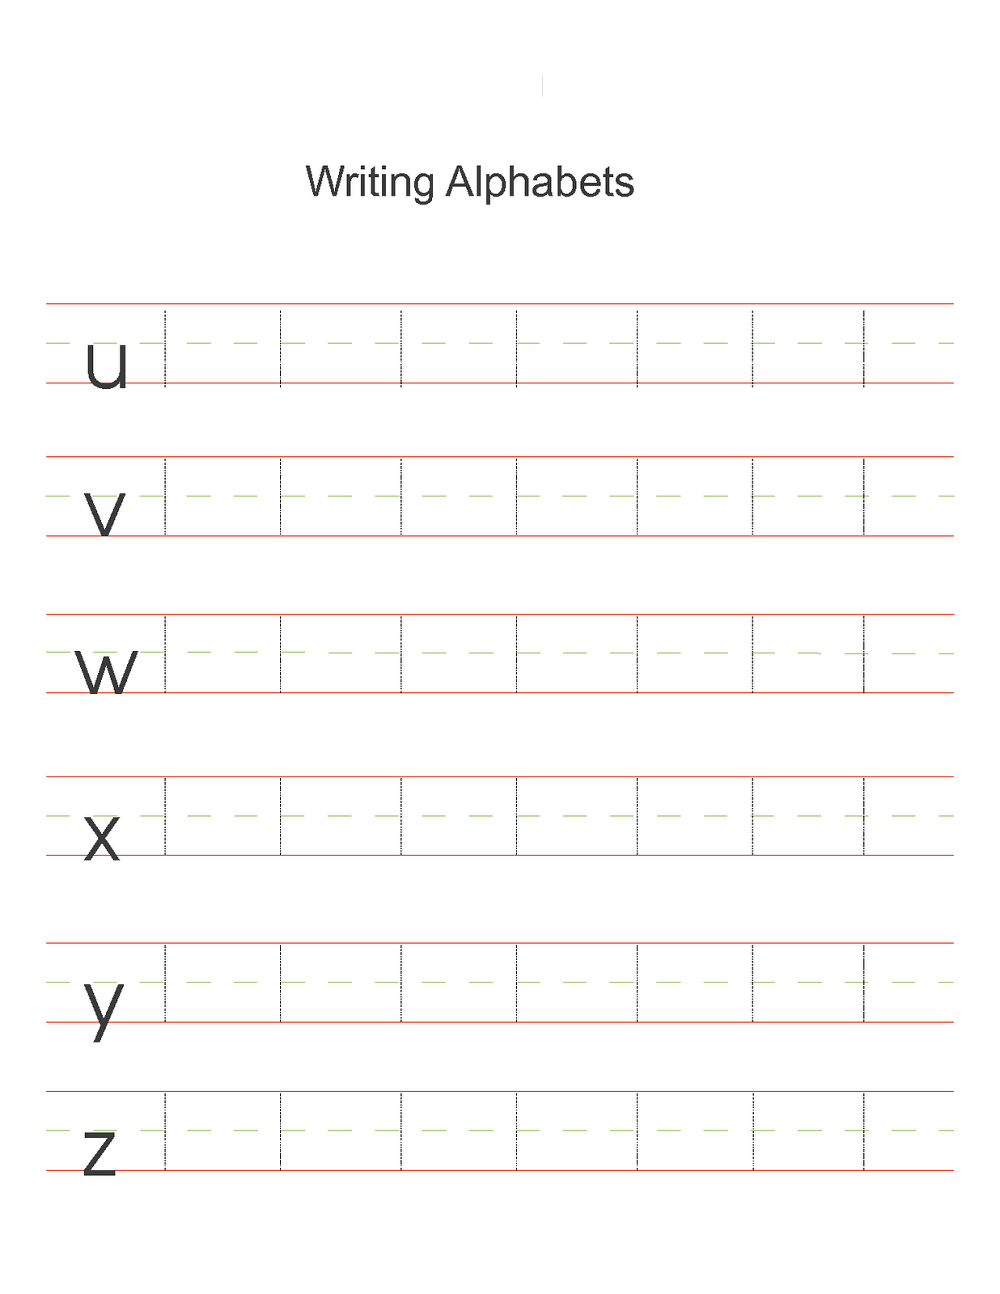 Worksheet ~ Splendig Worksheets Photo Ideas Alphabet For in Alphabet Handwriting Worksheets For Preschool